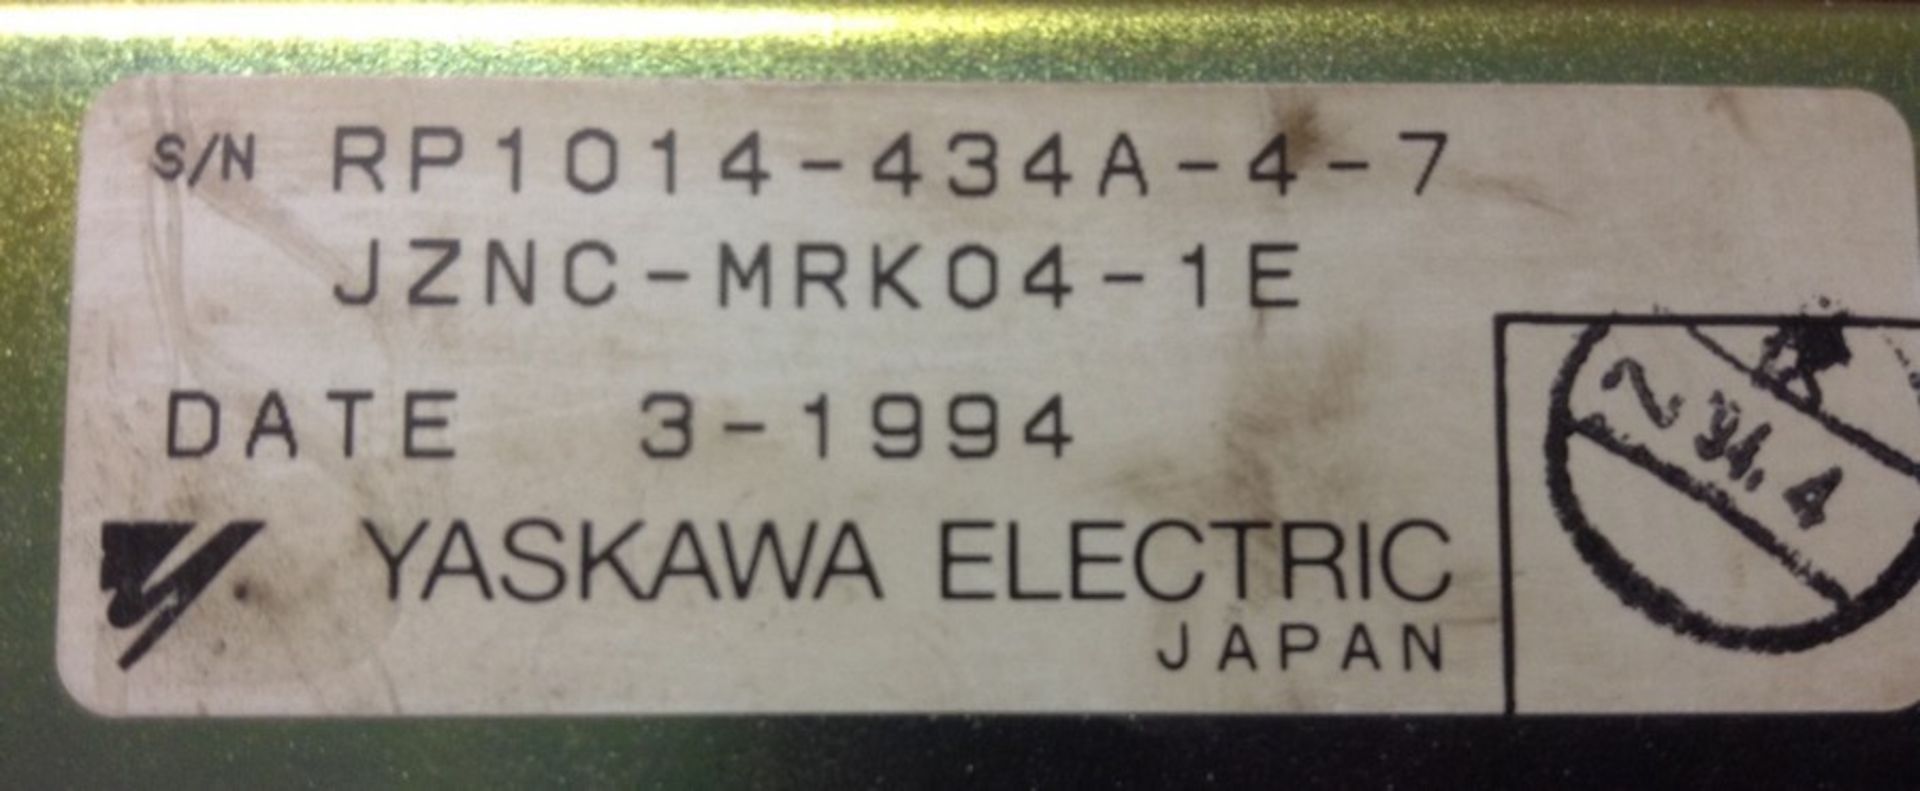 Yaskawa Motoman model JZNC-MRK04-1E PCB rack with power supply S/N RP1014-434A-4-7 - Image 3 of 3